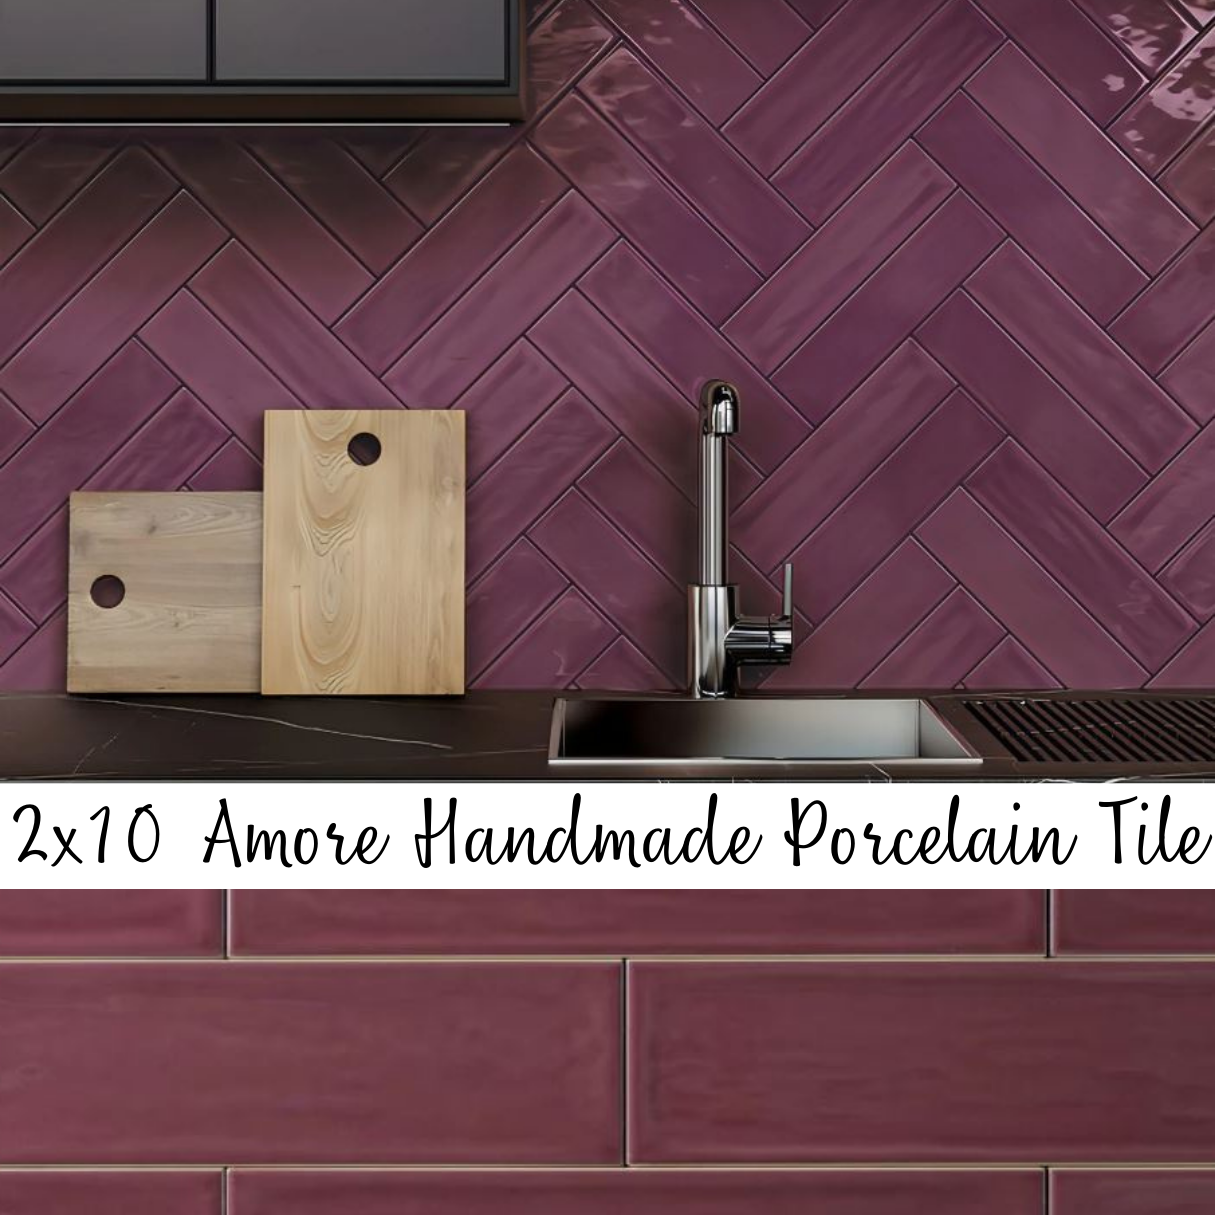 Tenedos Burgundy Purple Handmade Ceramic Subway 3x12 Wall Tile Backsplash Gloss Finish 3 Inch X 12 Inch for Kitchen, Bathroom Shower, Accent Decor, Fireplace